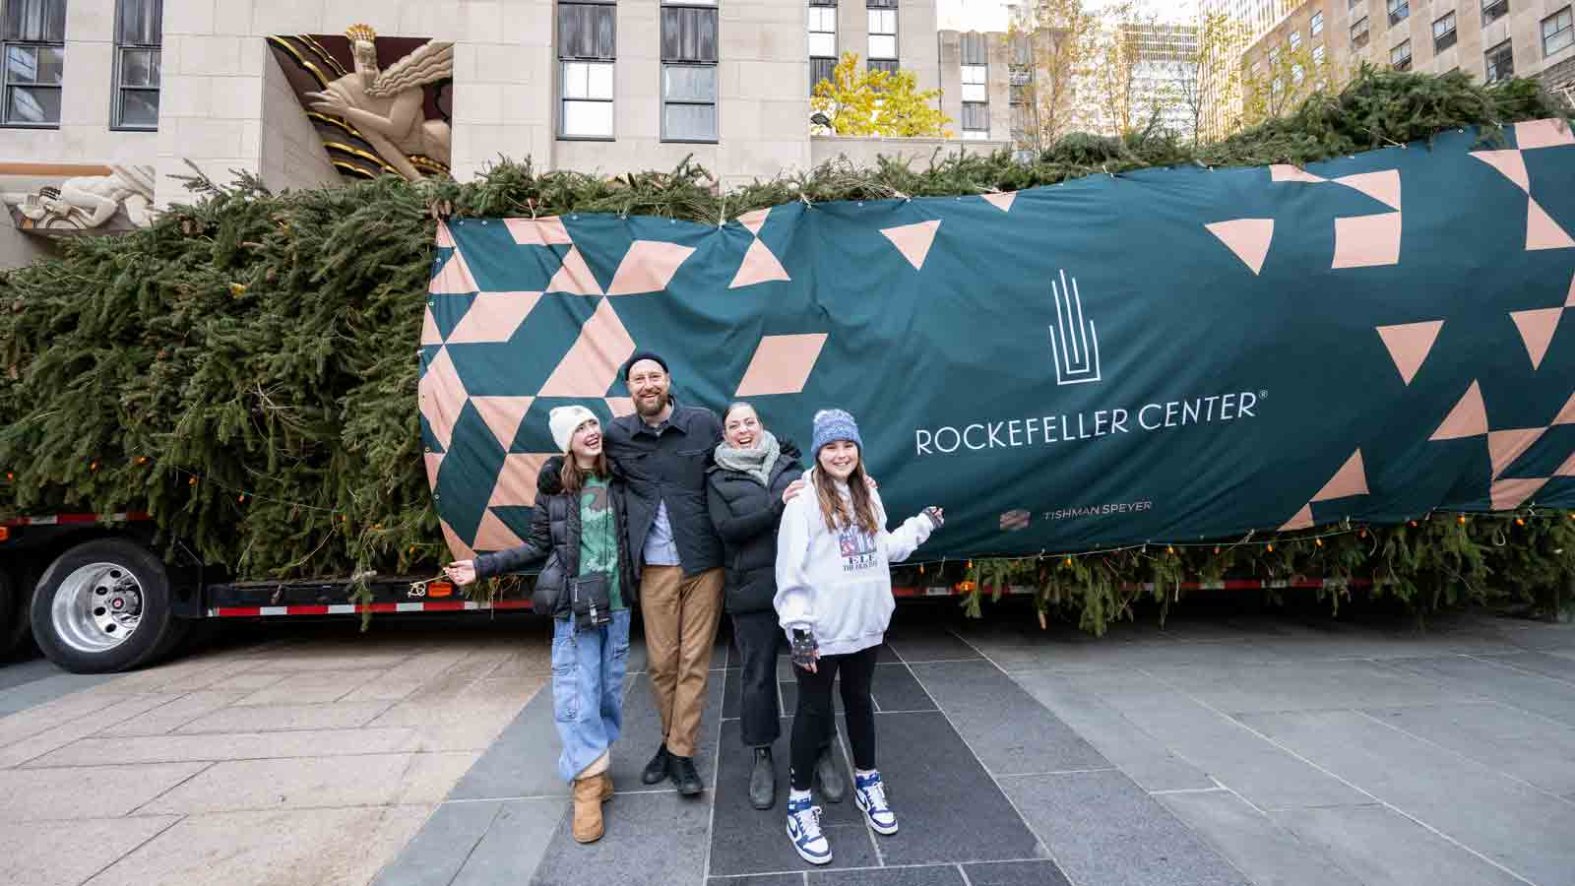 Who donated the Rockefeller Center Christmas tree? NBC Boston